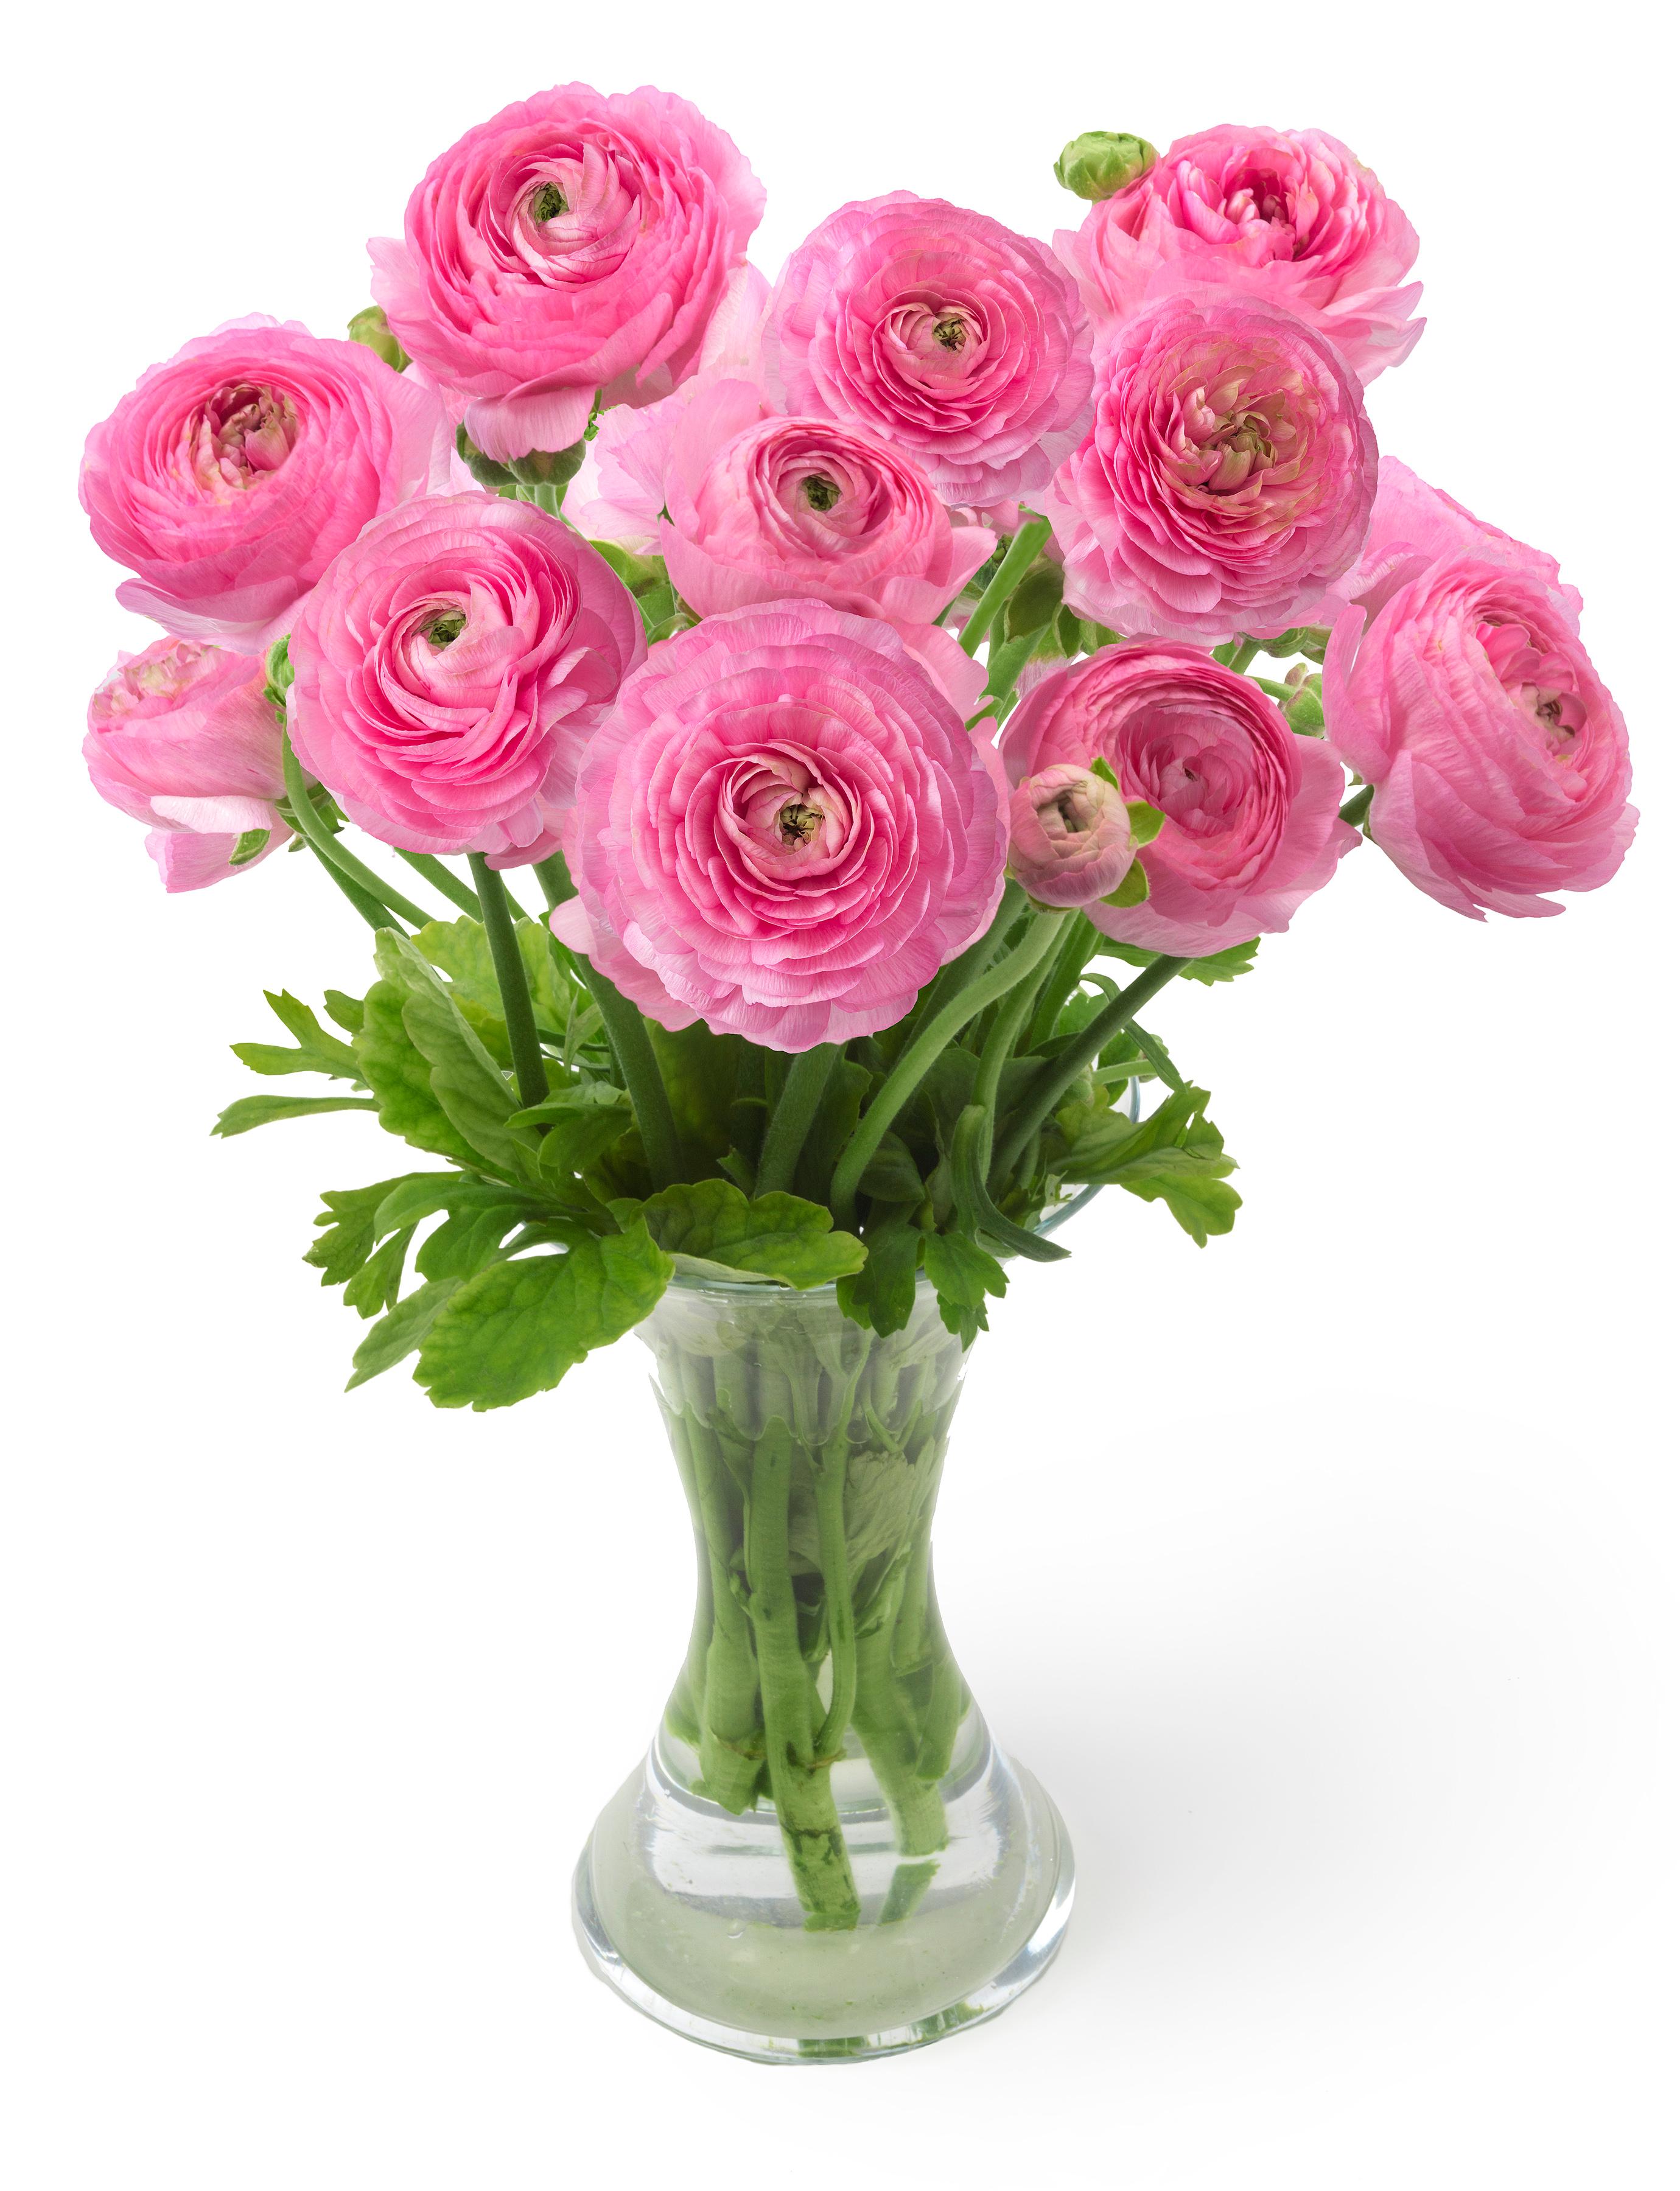 Ranunculus Romance Rosy Cheeks from Leo Berbee Bulb Company